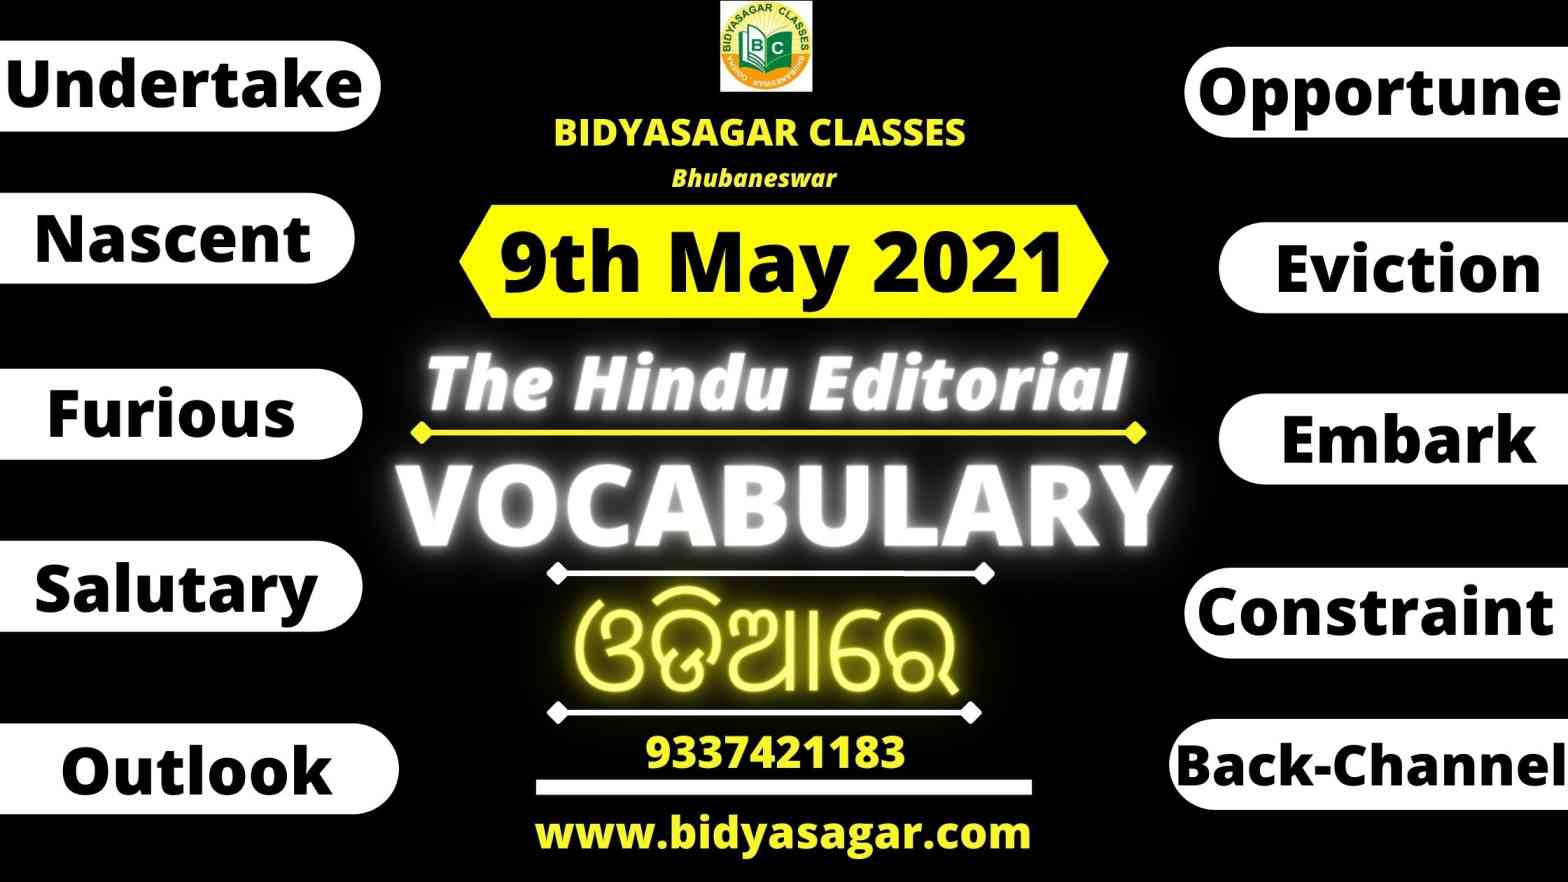 The Hindu Editorial Vocabulary of 9th May 2021